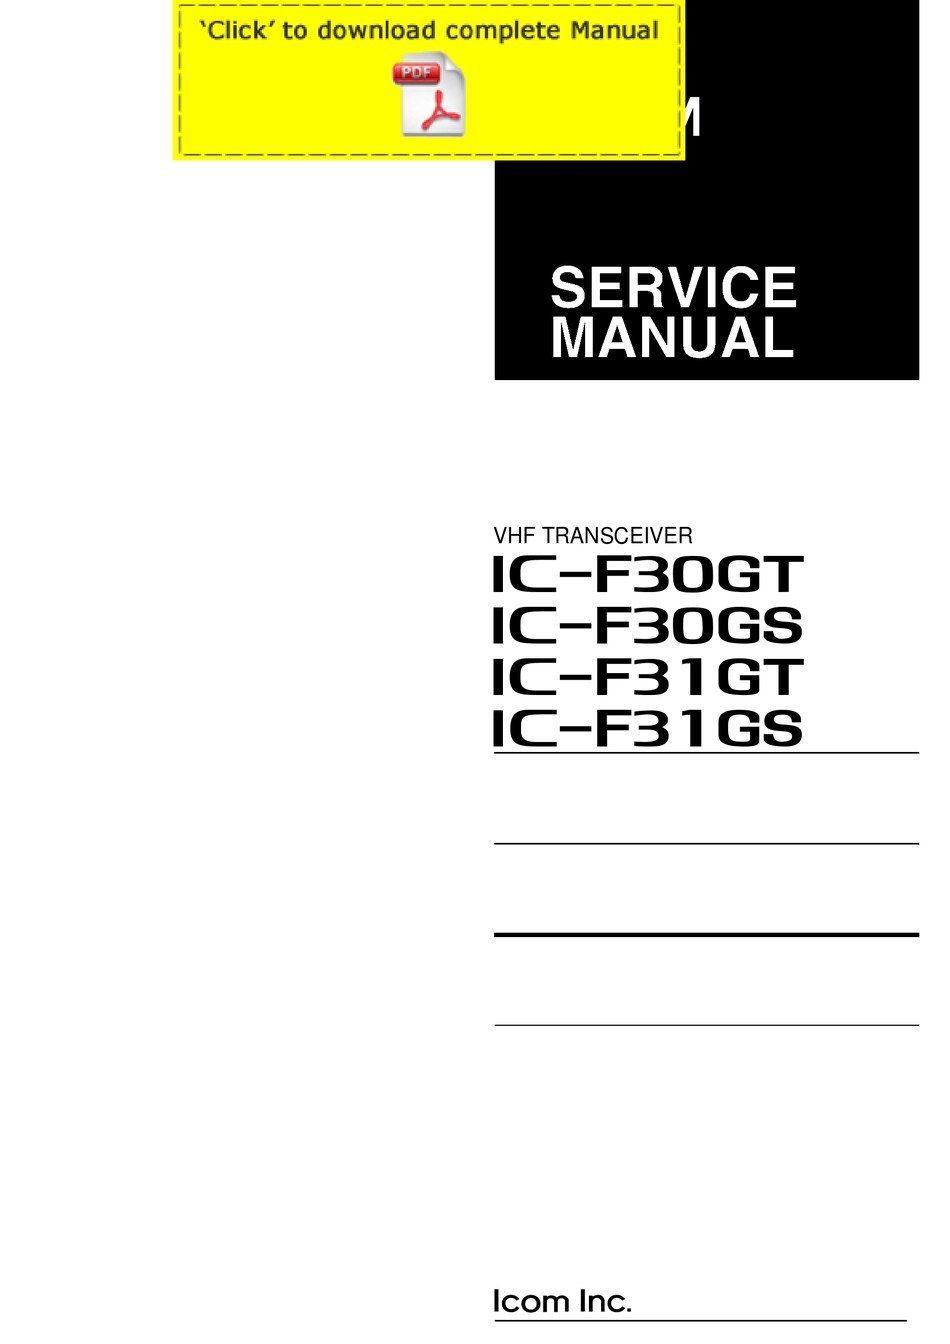 icom ic-v200 service manual